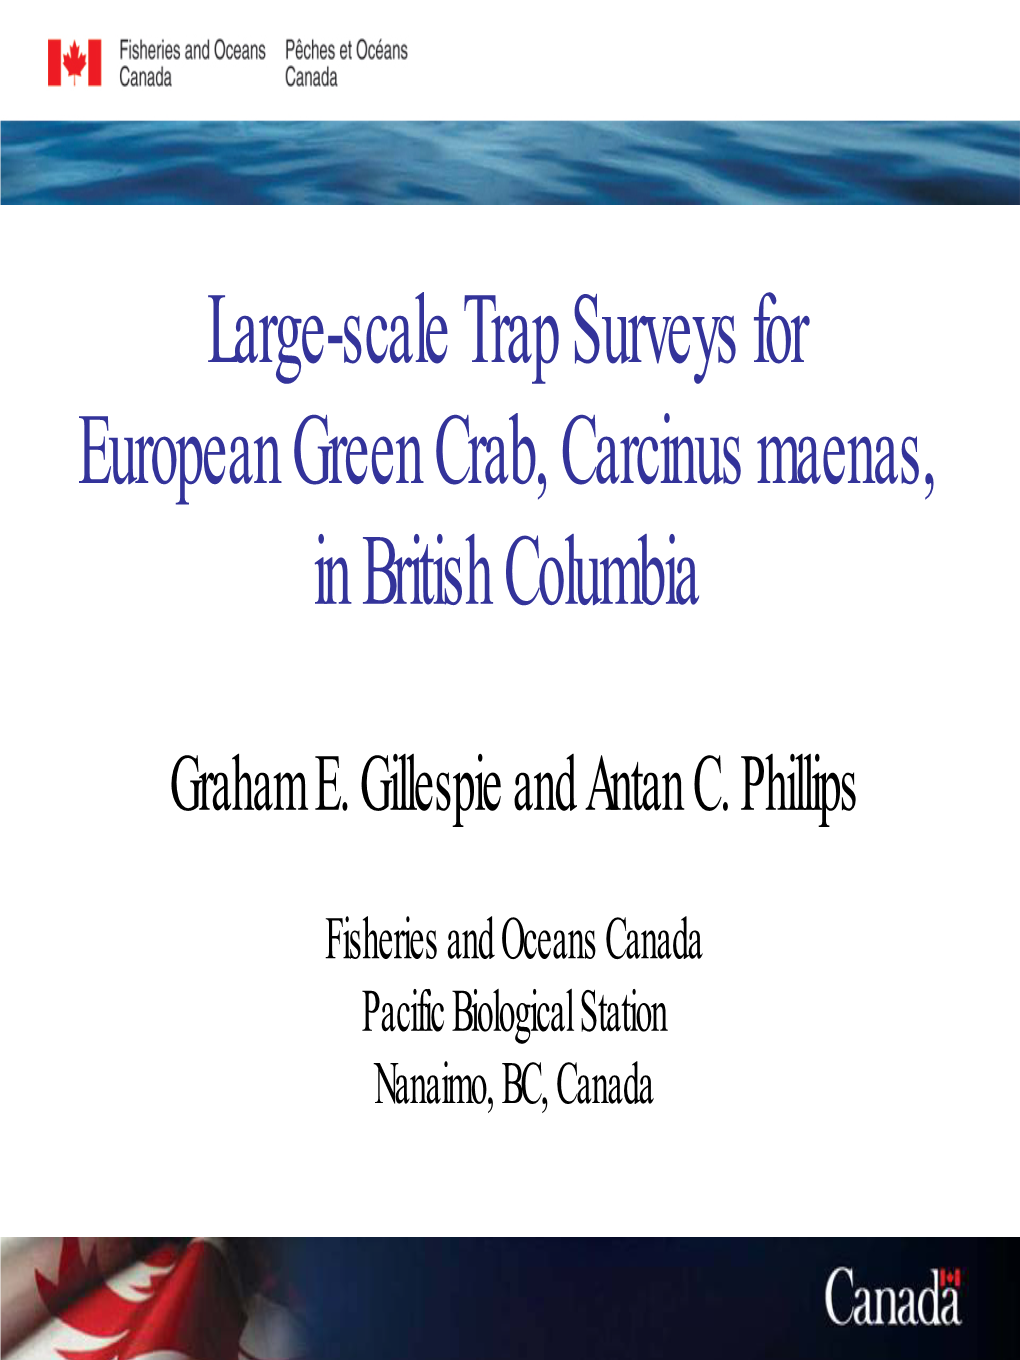 Trap Surveys in BC (Gillespie) – (PDF)